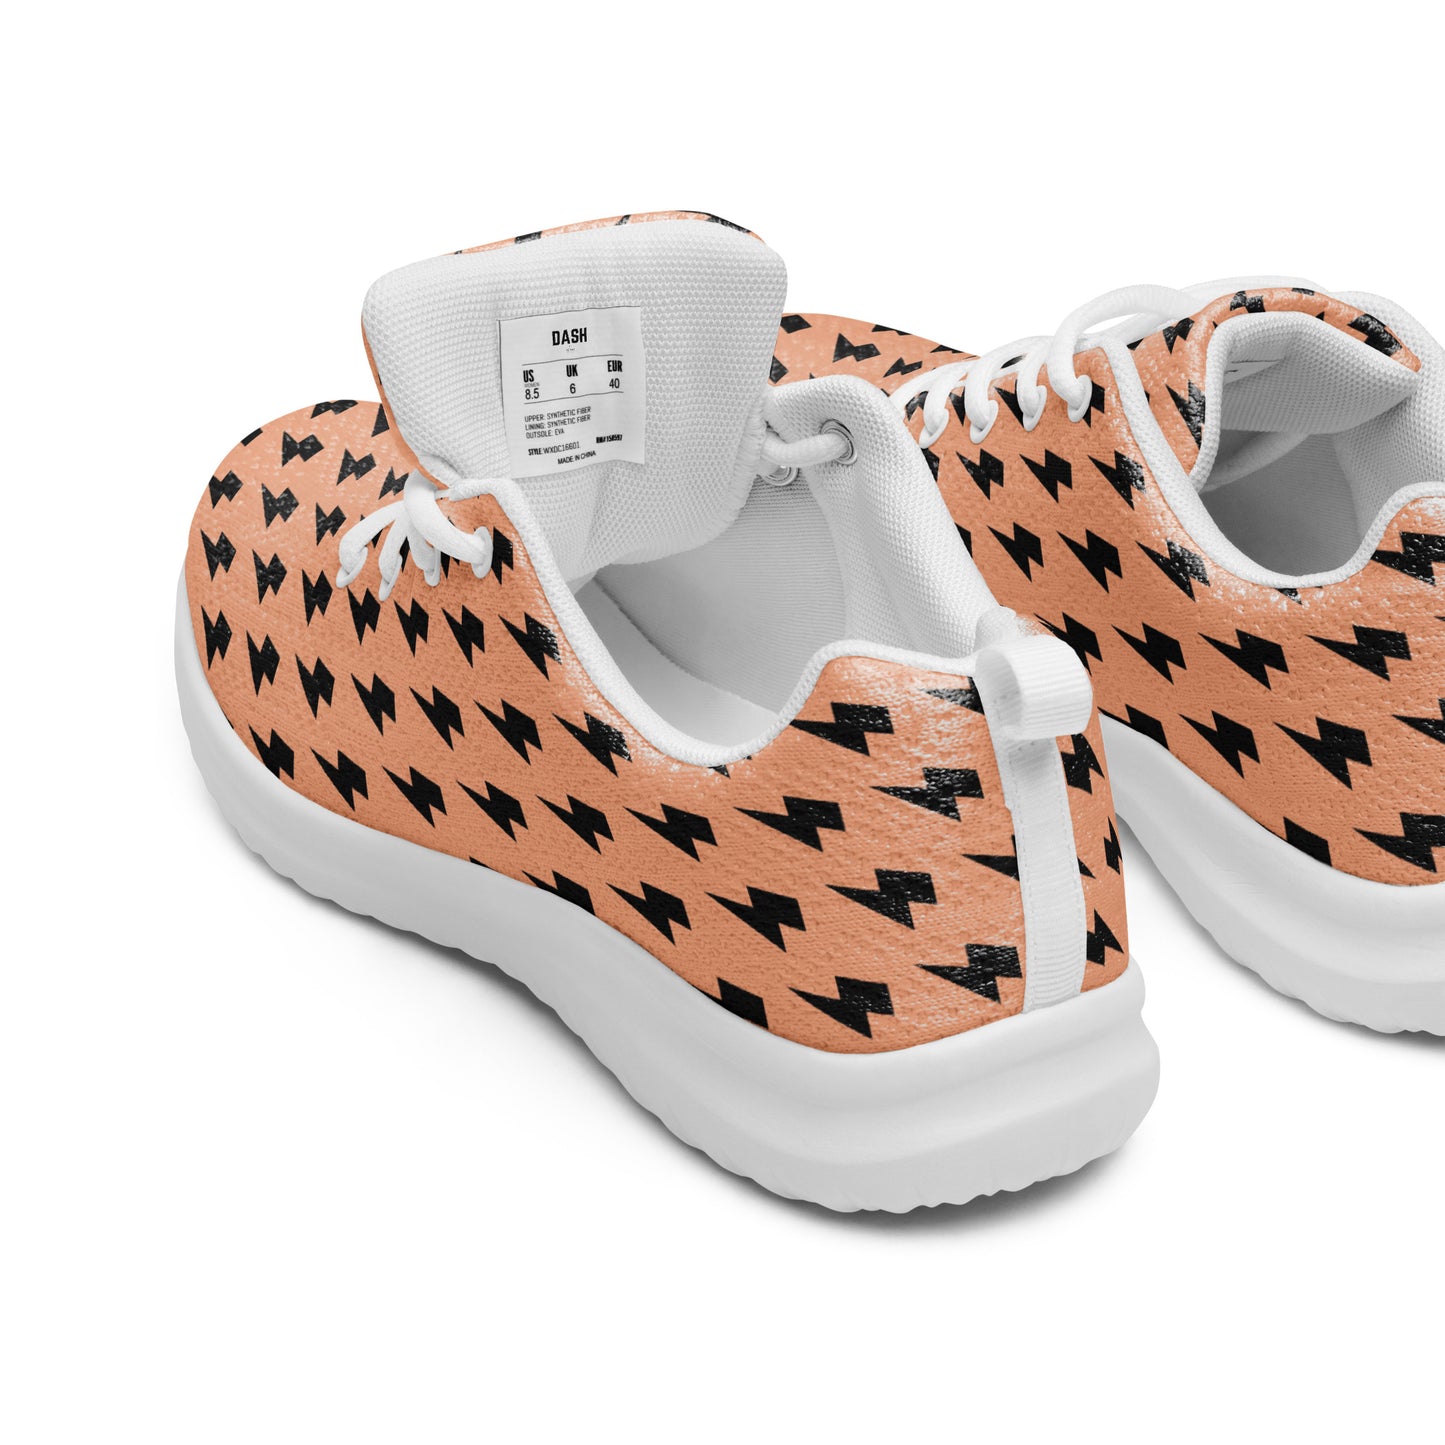 DASH Lightning Mondy Pink Men’s Athletic Shoes Lightweight Breathable Design by IOBI Original Apparel